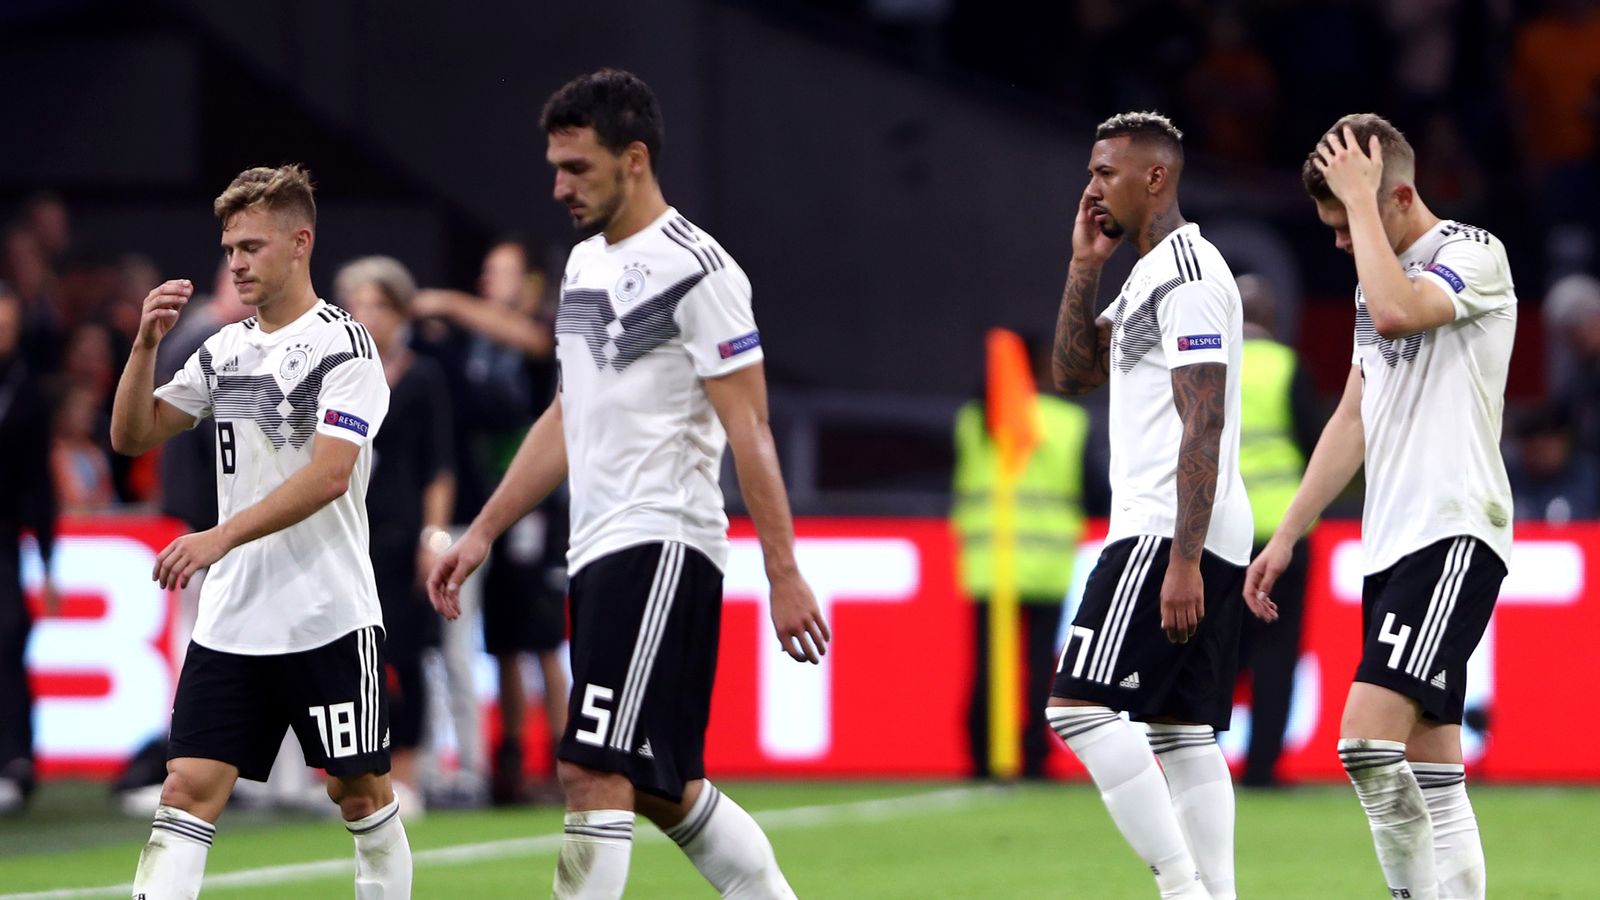 Netherlands 3 - 0 Germany - Match Report & Highlights